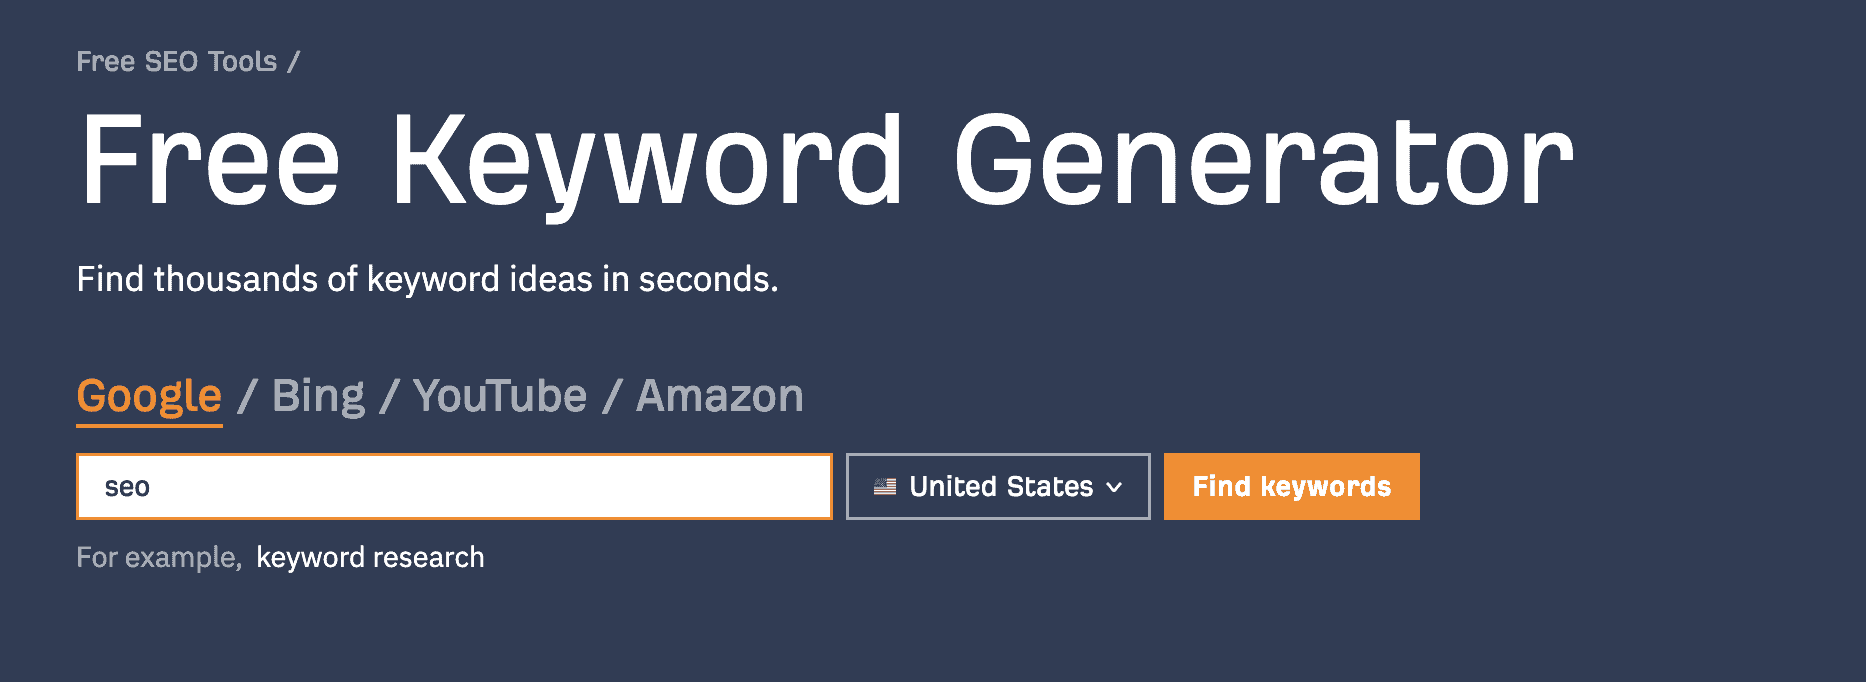 Free Keyword Generator